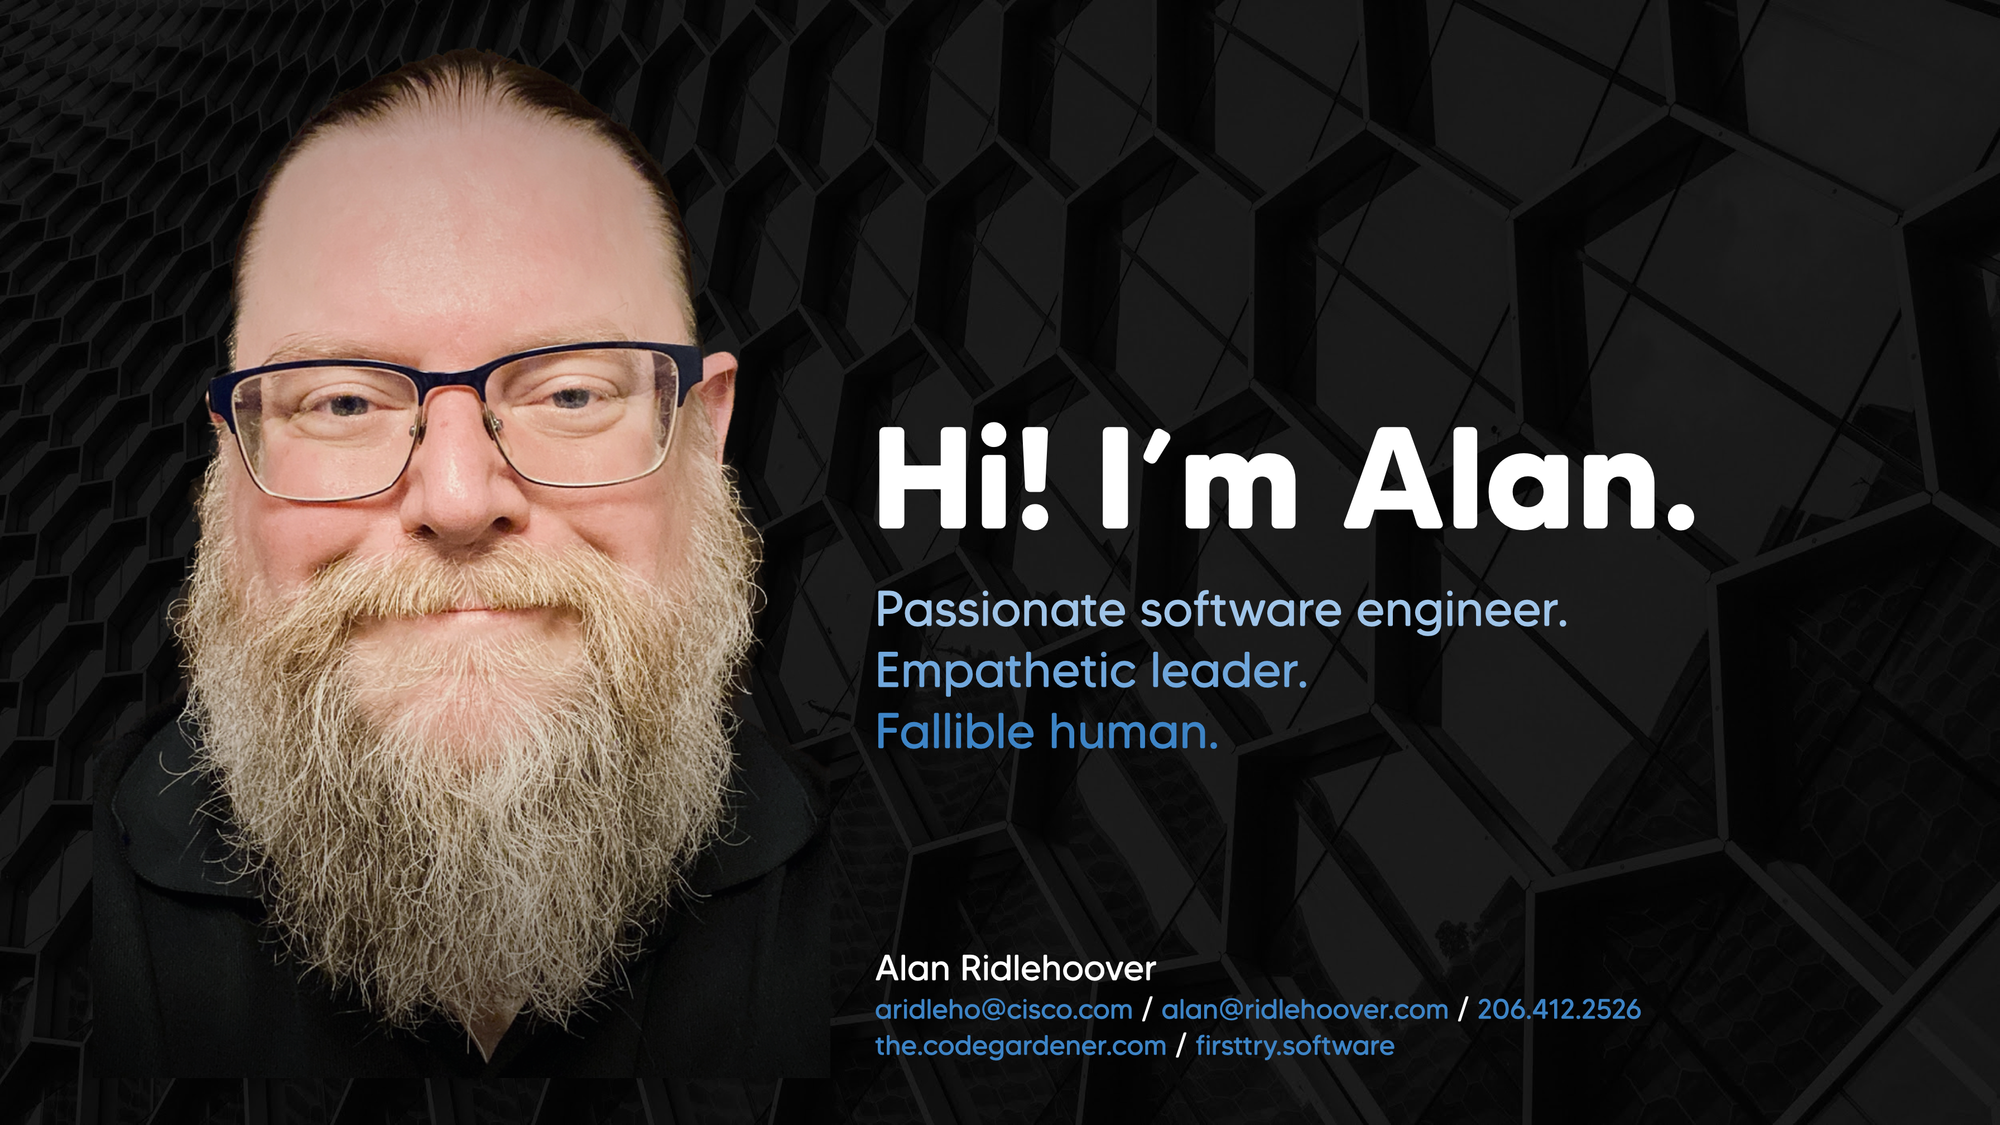 Alan Ridlehoover's Leadership Deck - Title Slide with my headshot